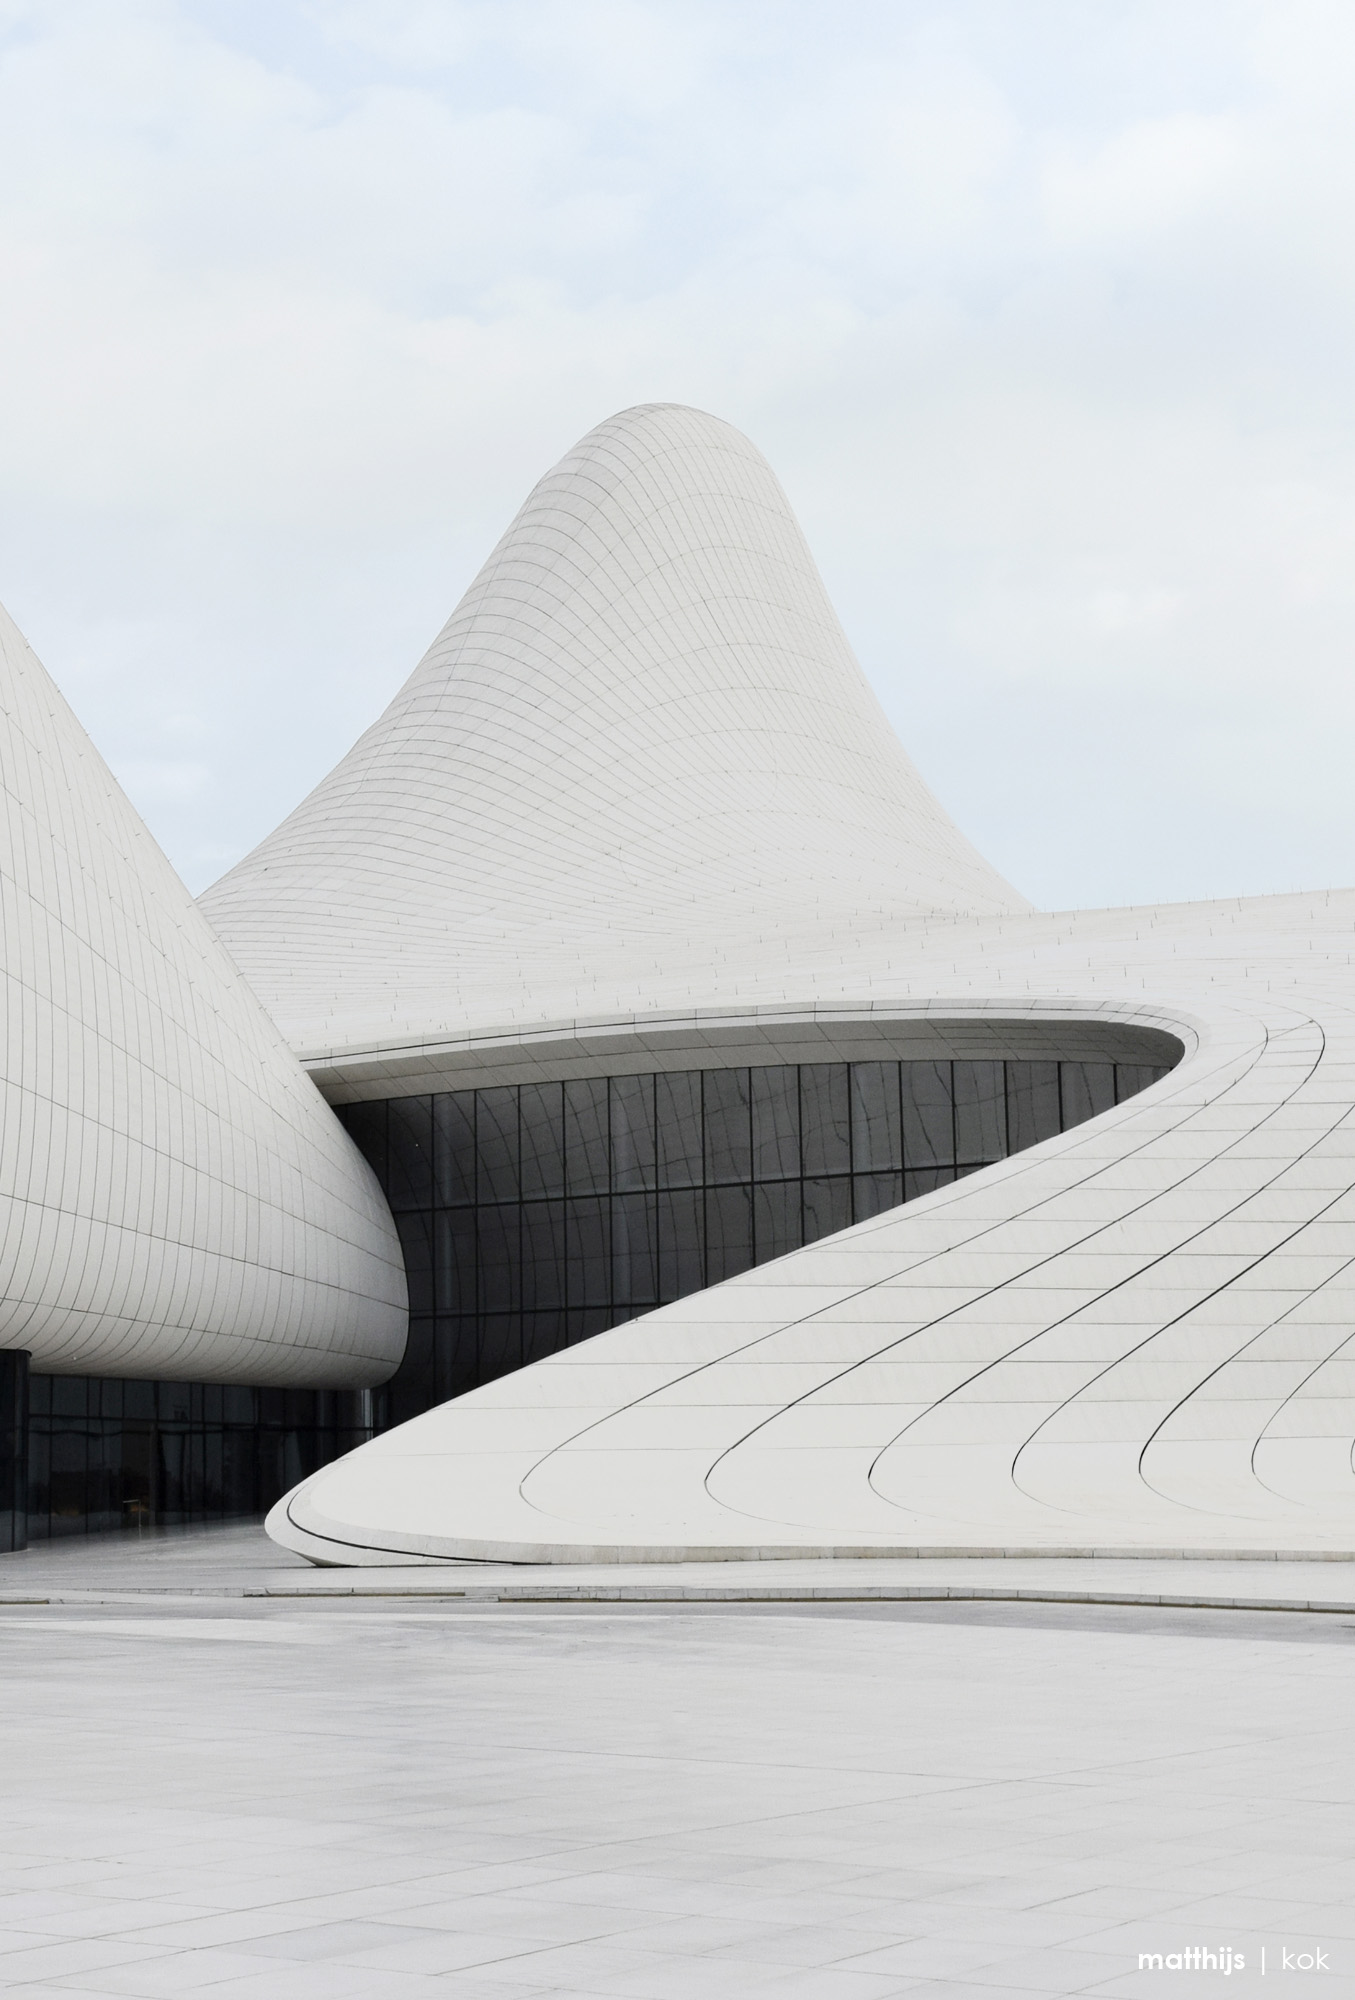  Heydar Aliyev Center by Zaha Hadid, Baku, Azerbaijan | Photo by Matthijs Kok